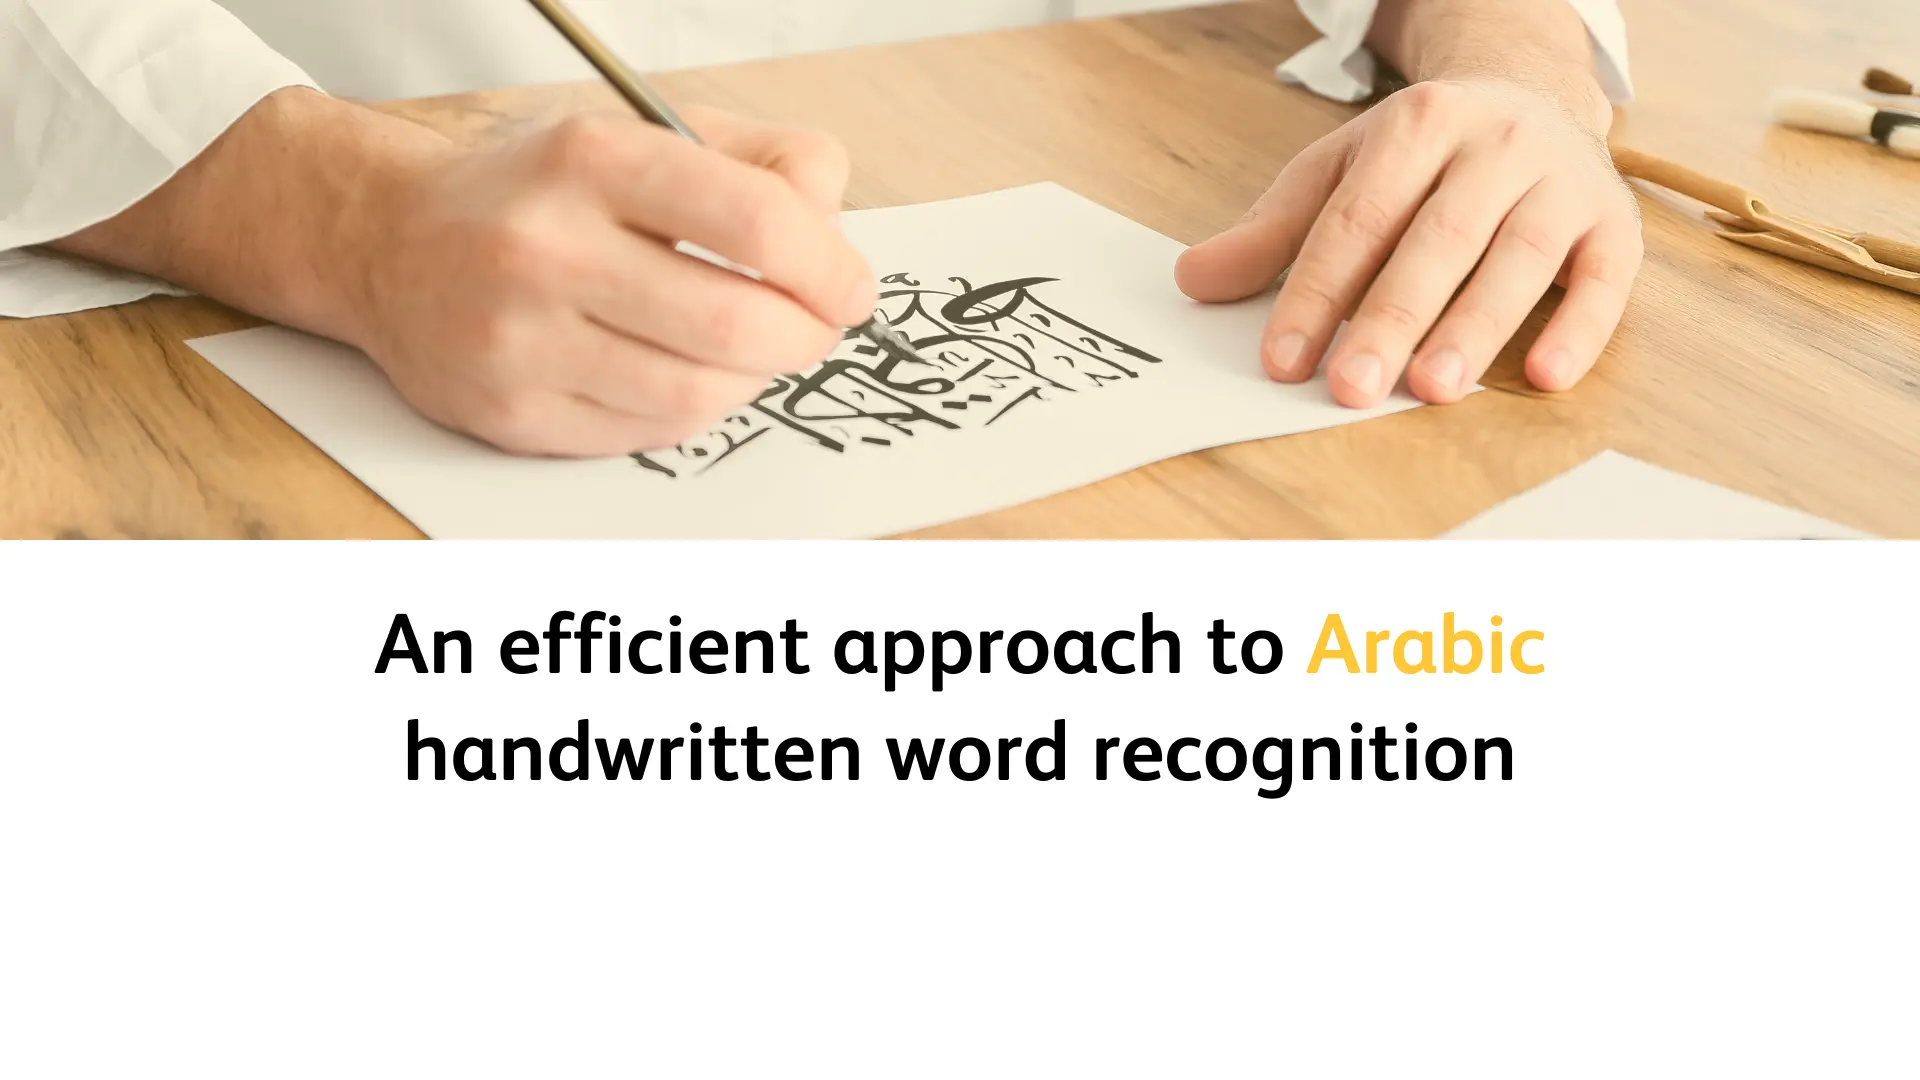 An efficient approach to Arabic handwritten word recognition